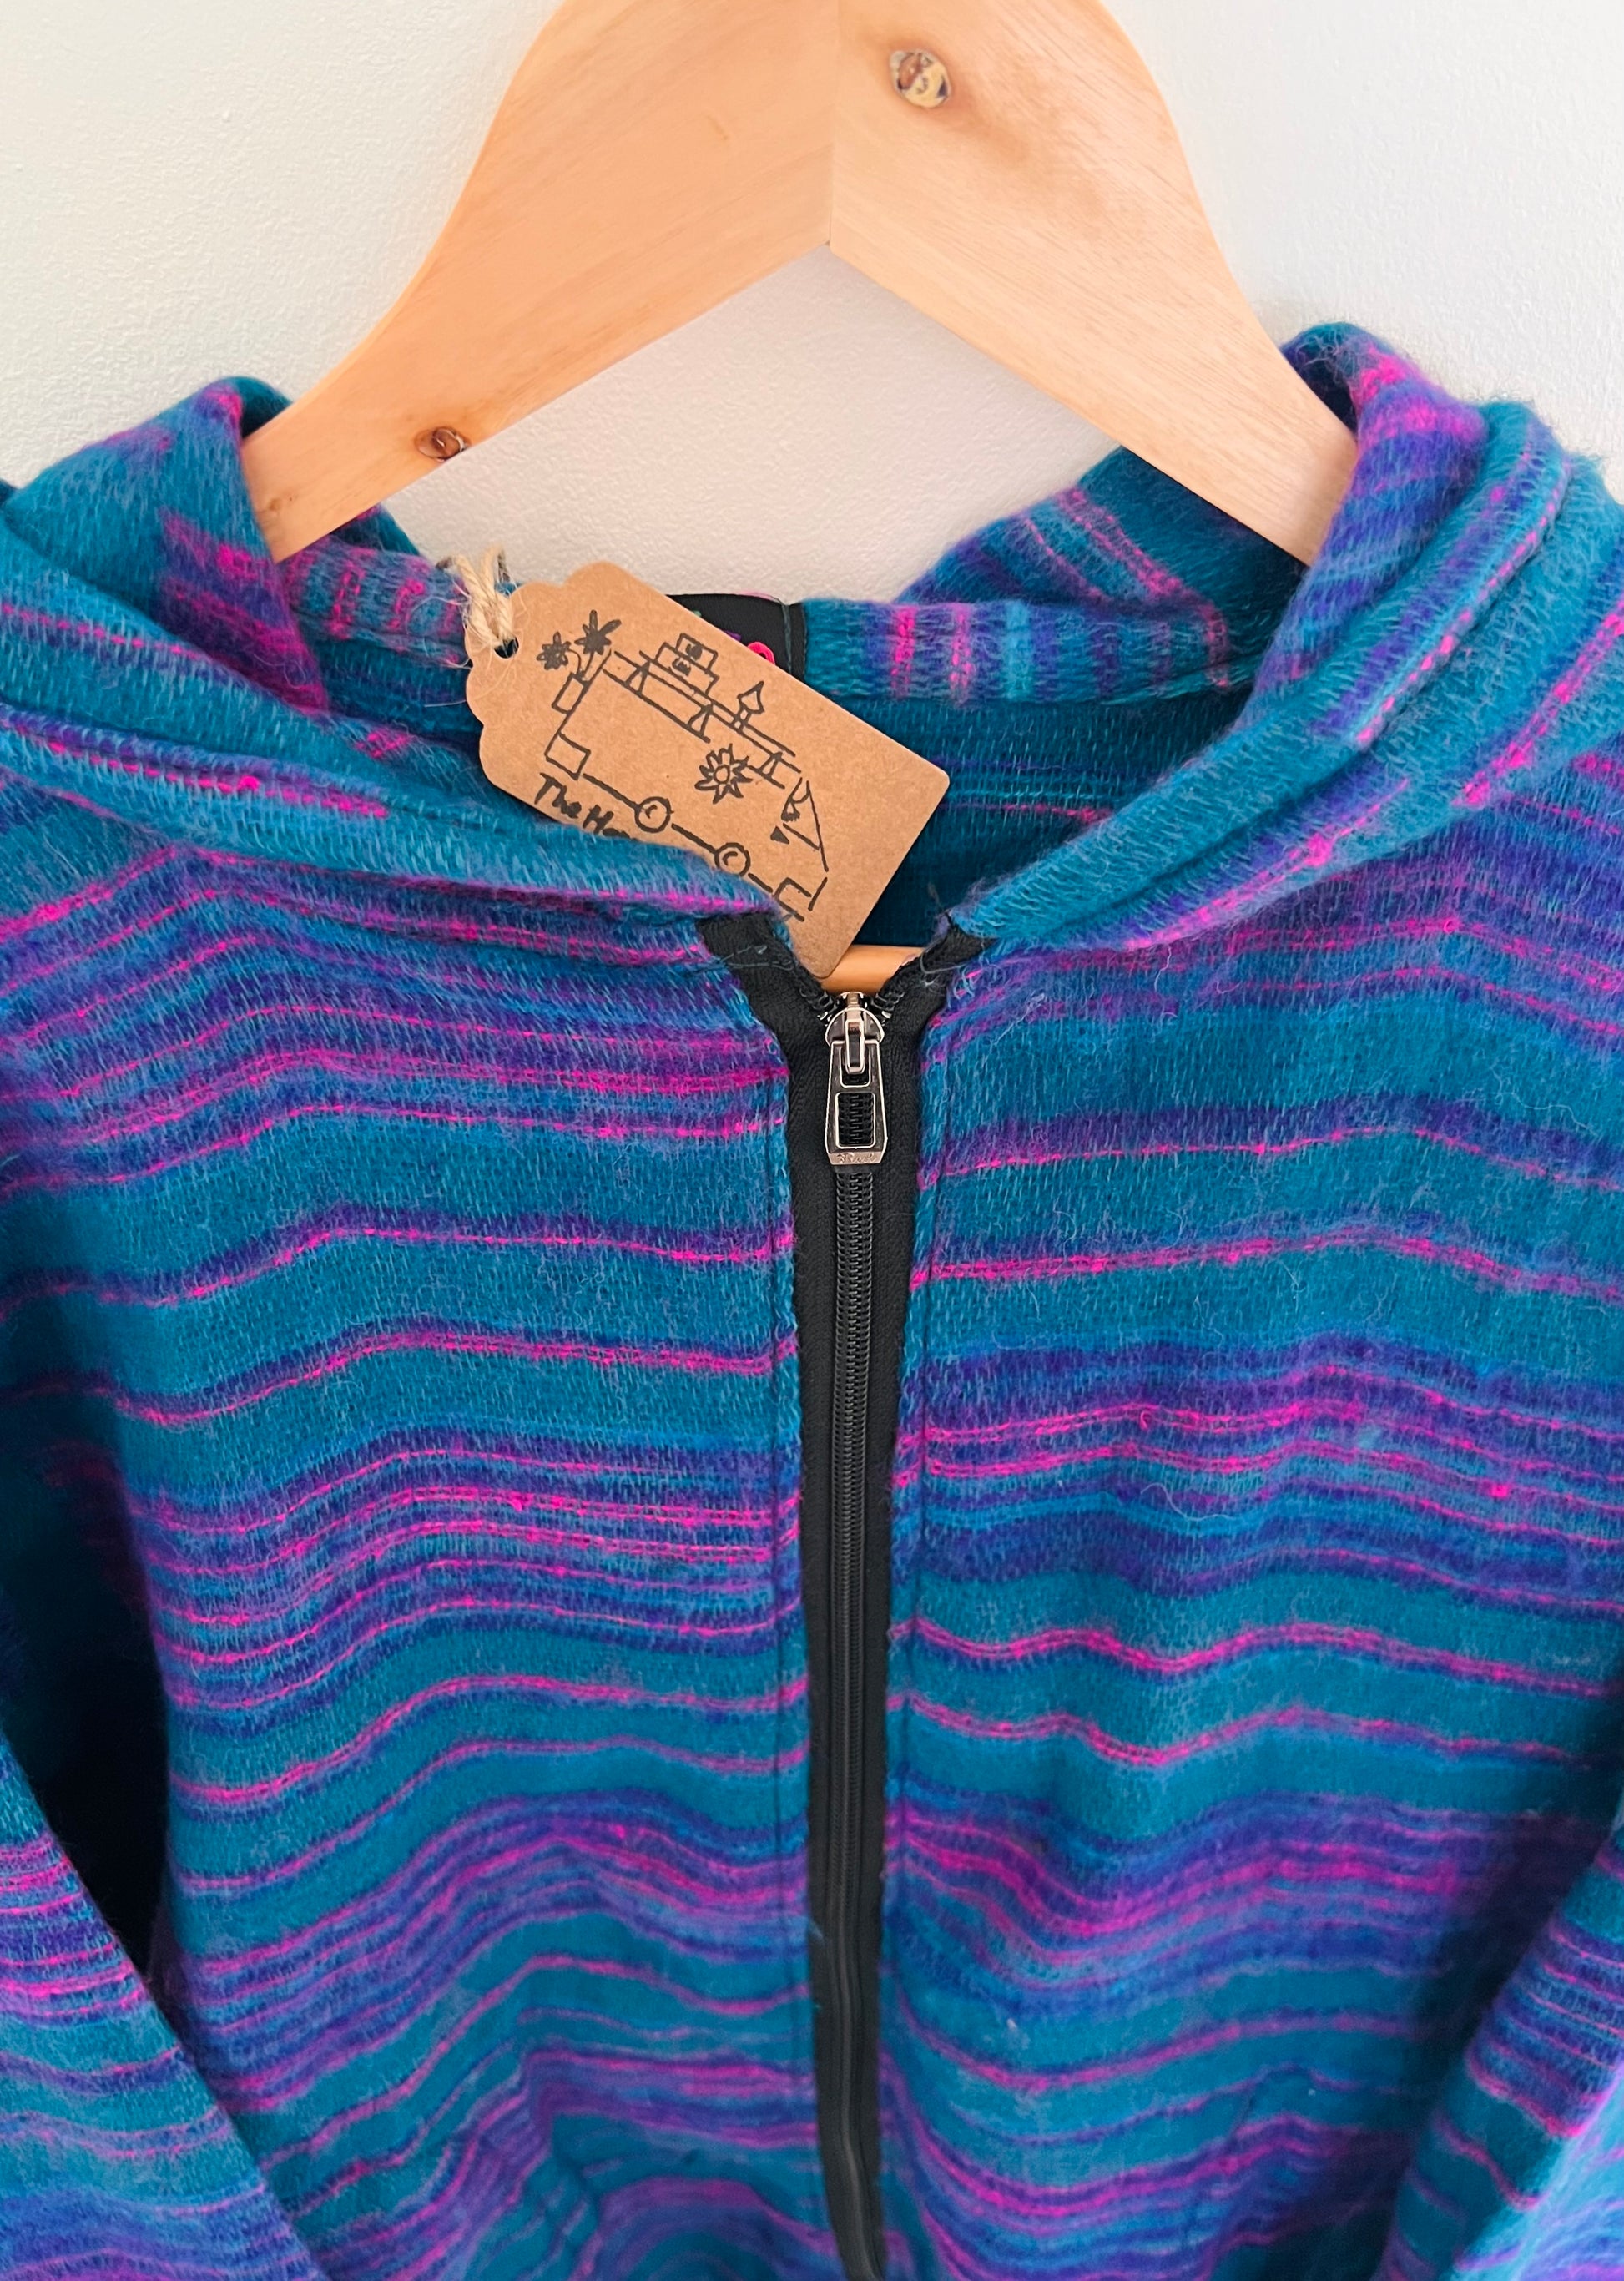 Fair trade handmade boho hippie hooded top sweater purple blue stripe